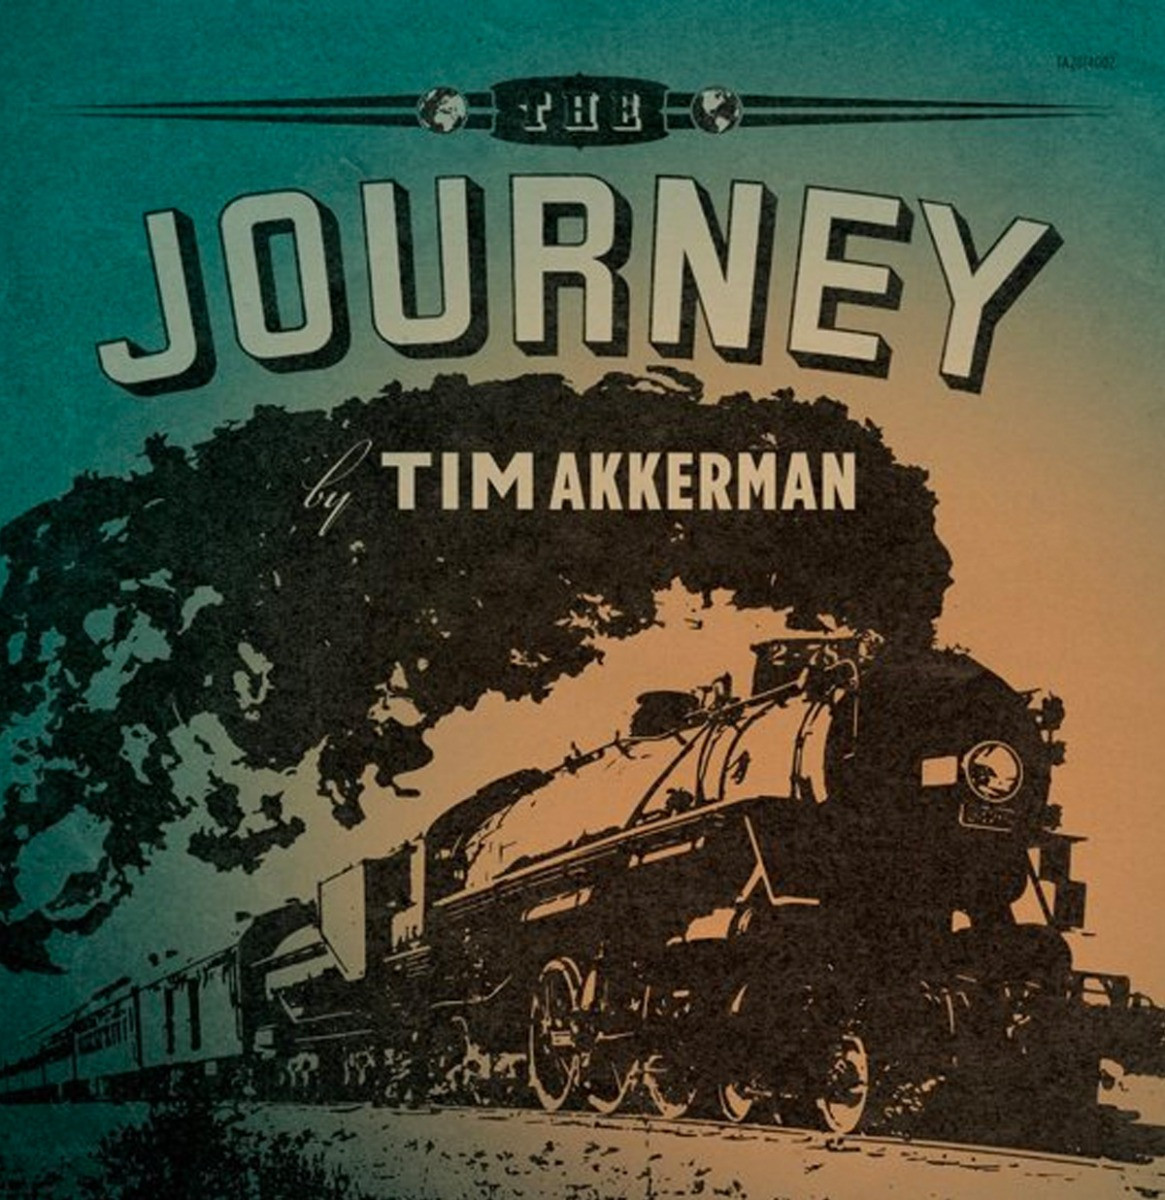 Tim Akkerman - The Journey LP